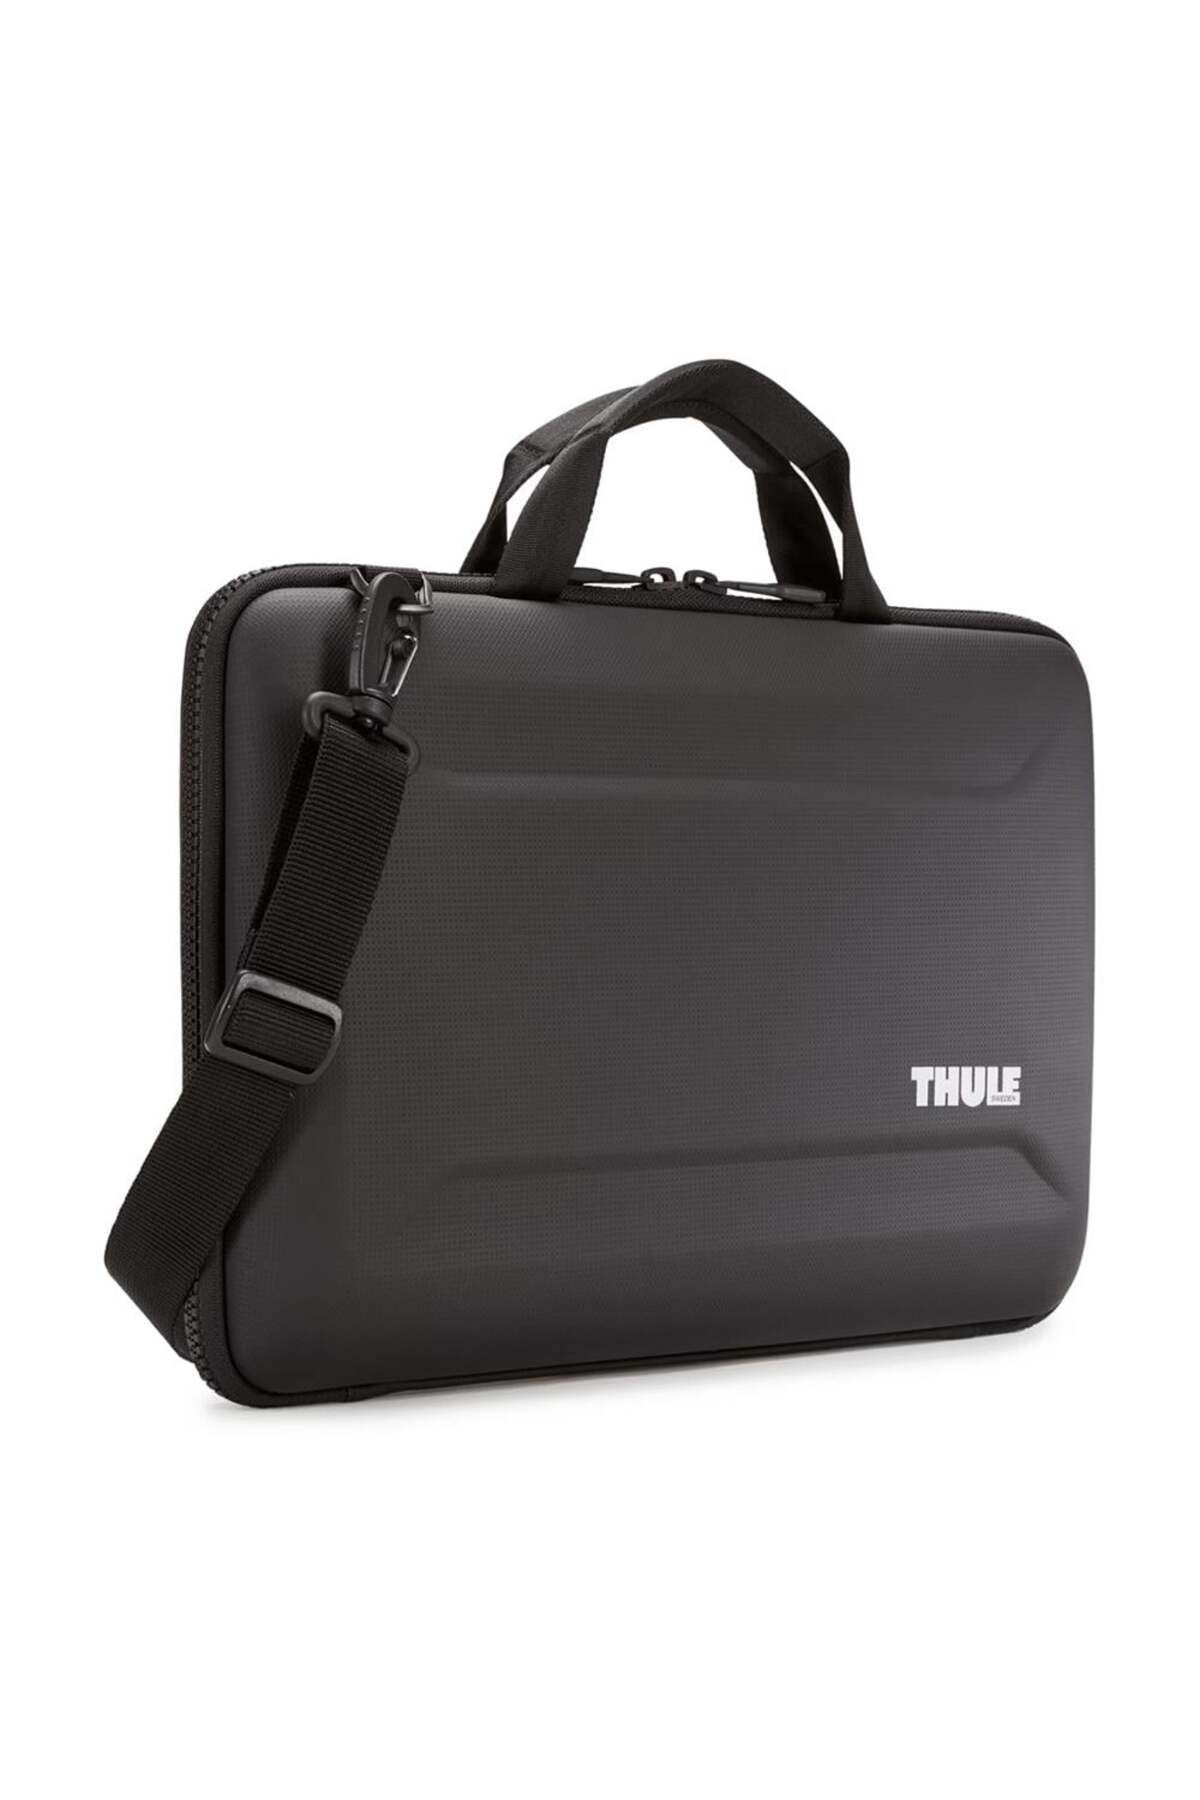 Thule Gauntlet 4 MacBook Pro Çantası 16" - Siyah